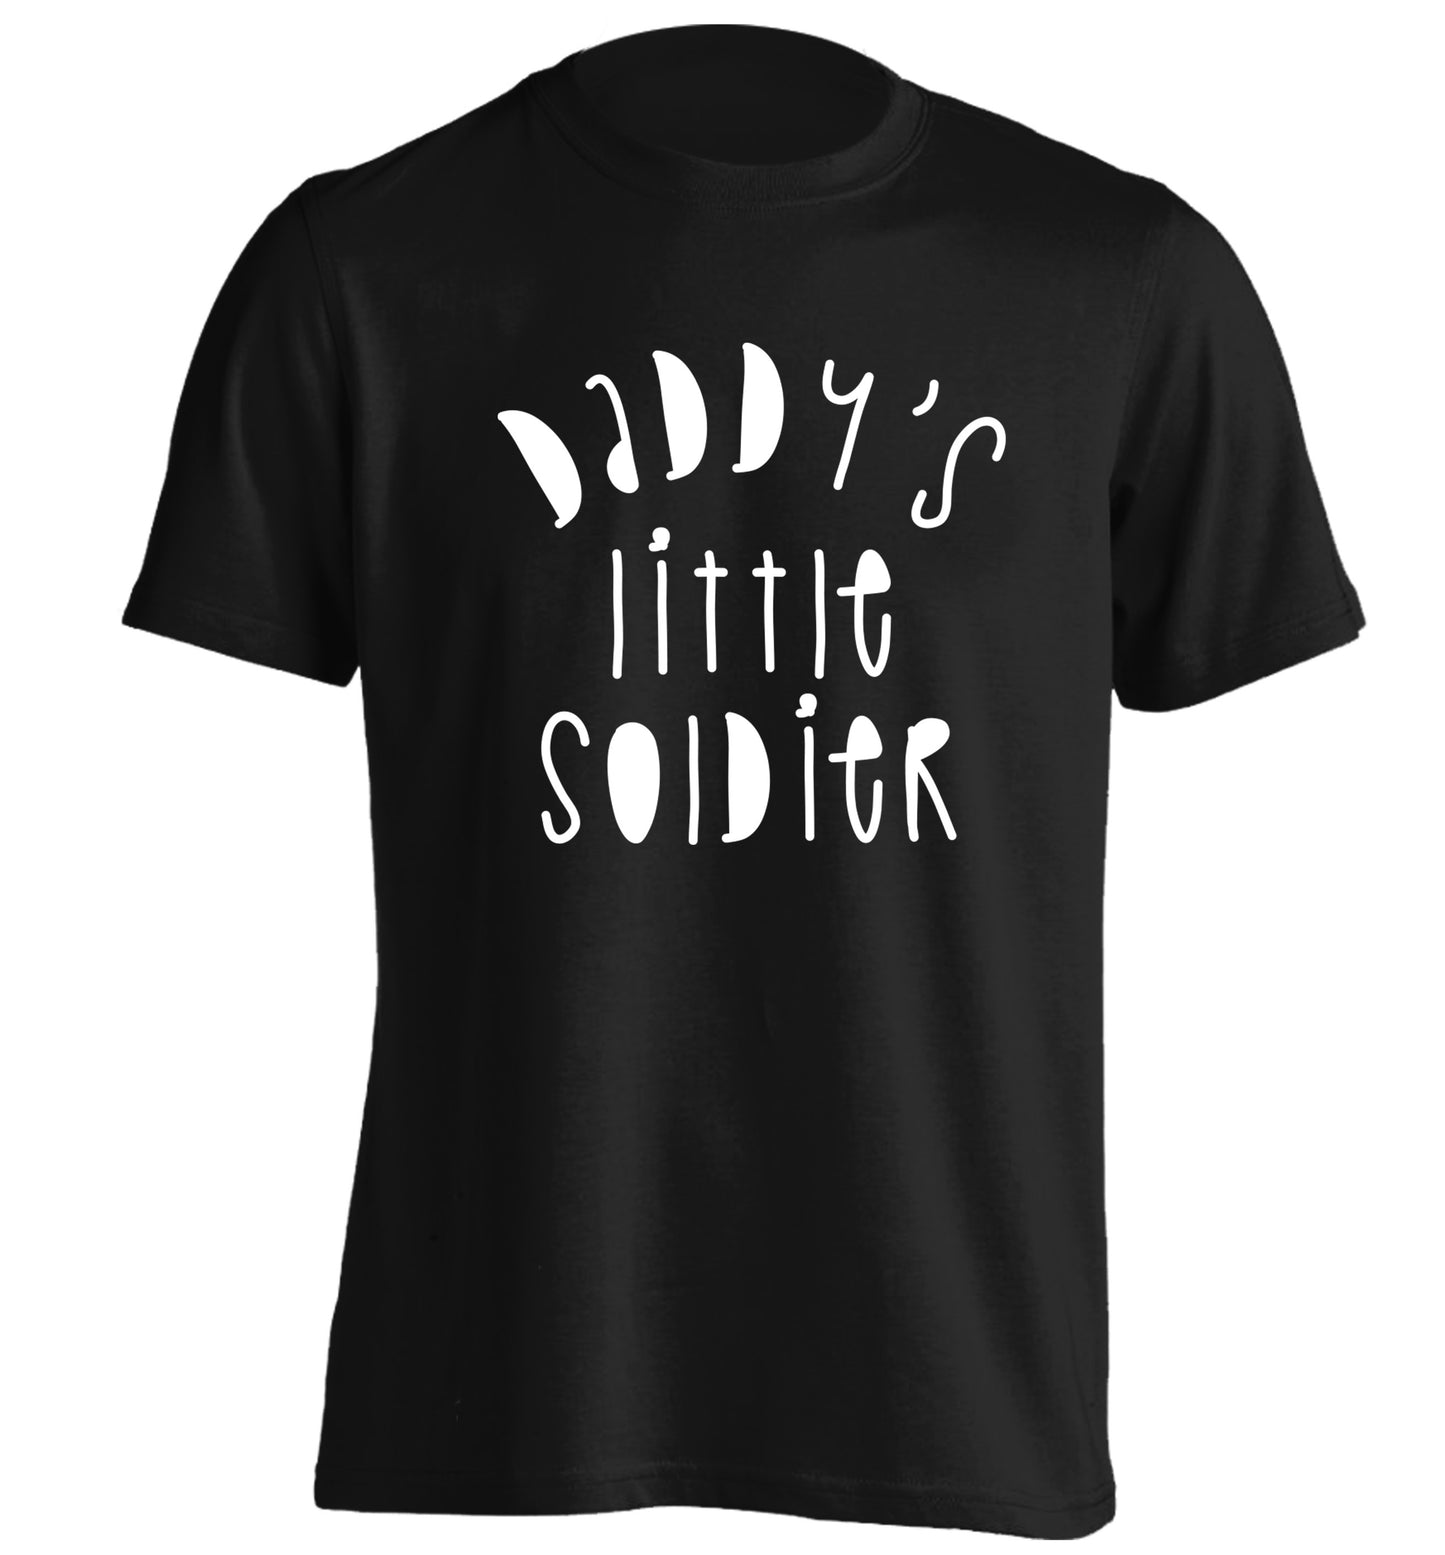 Daddy's little soldier adults unisex black Tshirt 2XL